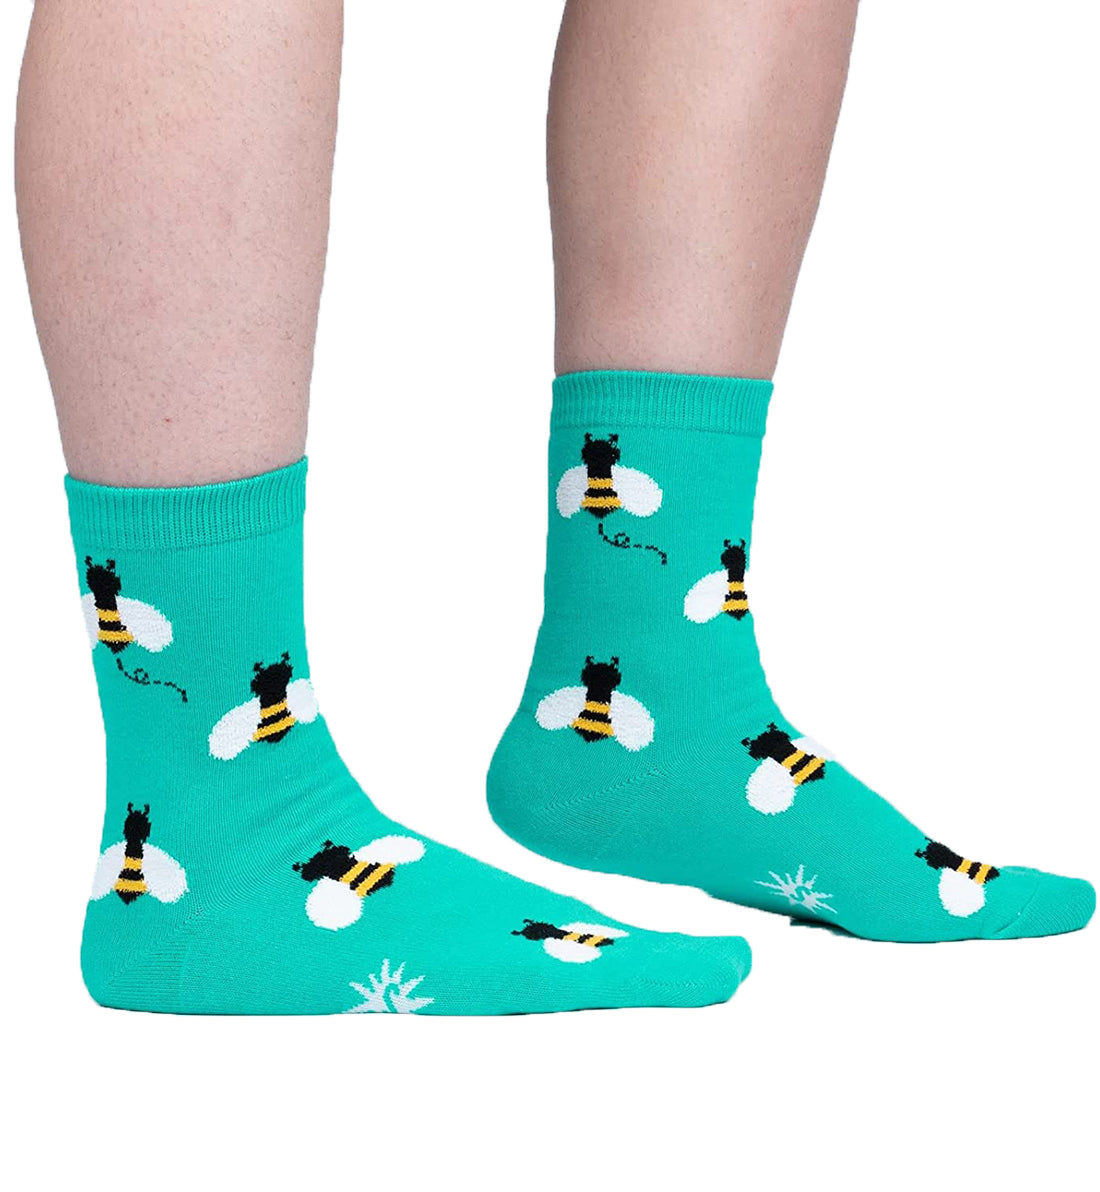 SOCK it to me Women's Crew Socks (W0401),Bee Happy - Bee Happy,One Size